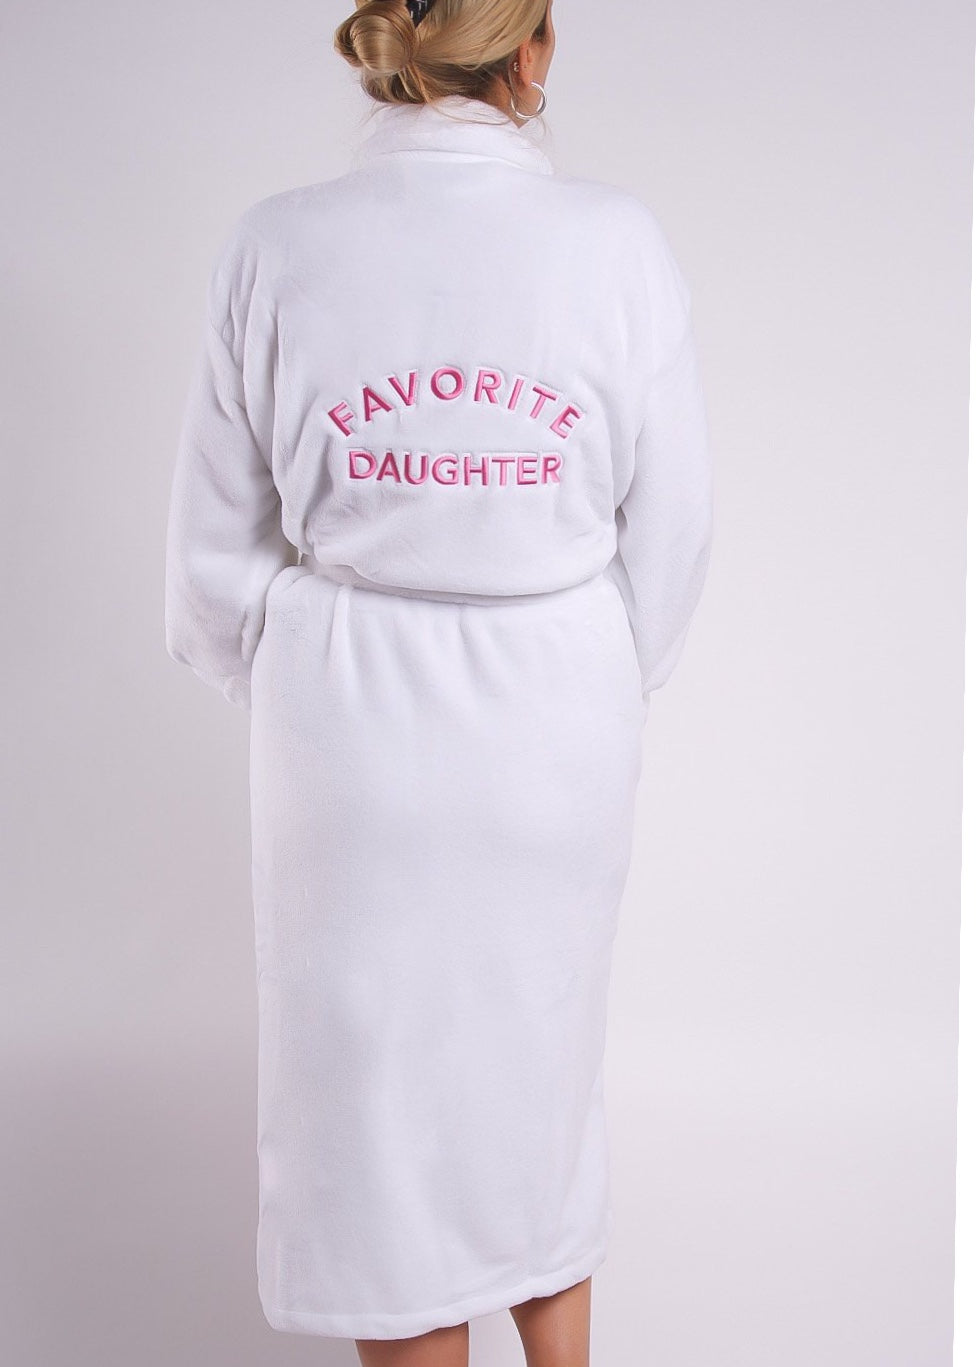 women's white favorite daughter robe